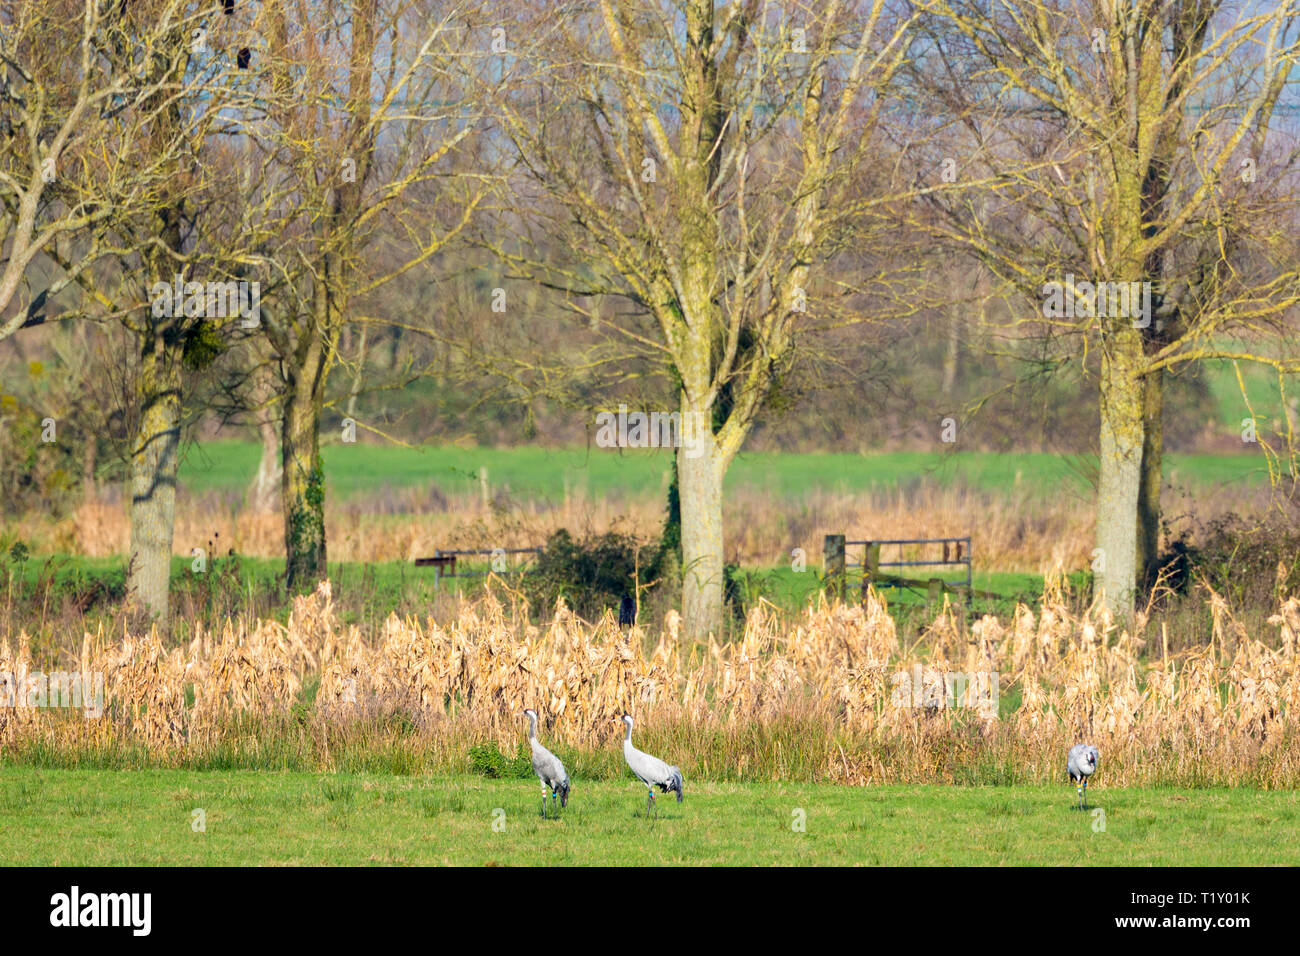 Gruppo di gru grus grus, grandi uccelli passeggiate in zone umide naturali di habitat in Somerset livelli paludi, REGNO UNITO Foto Stock